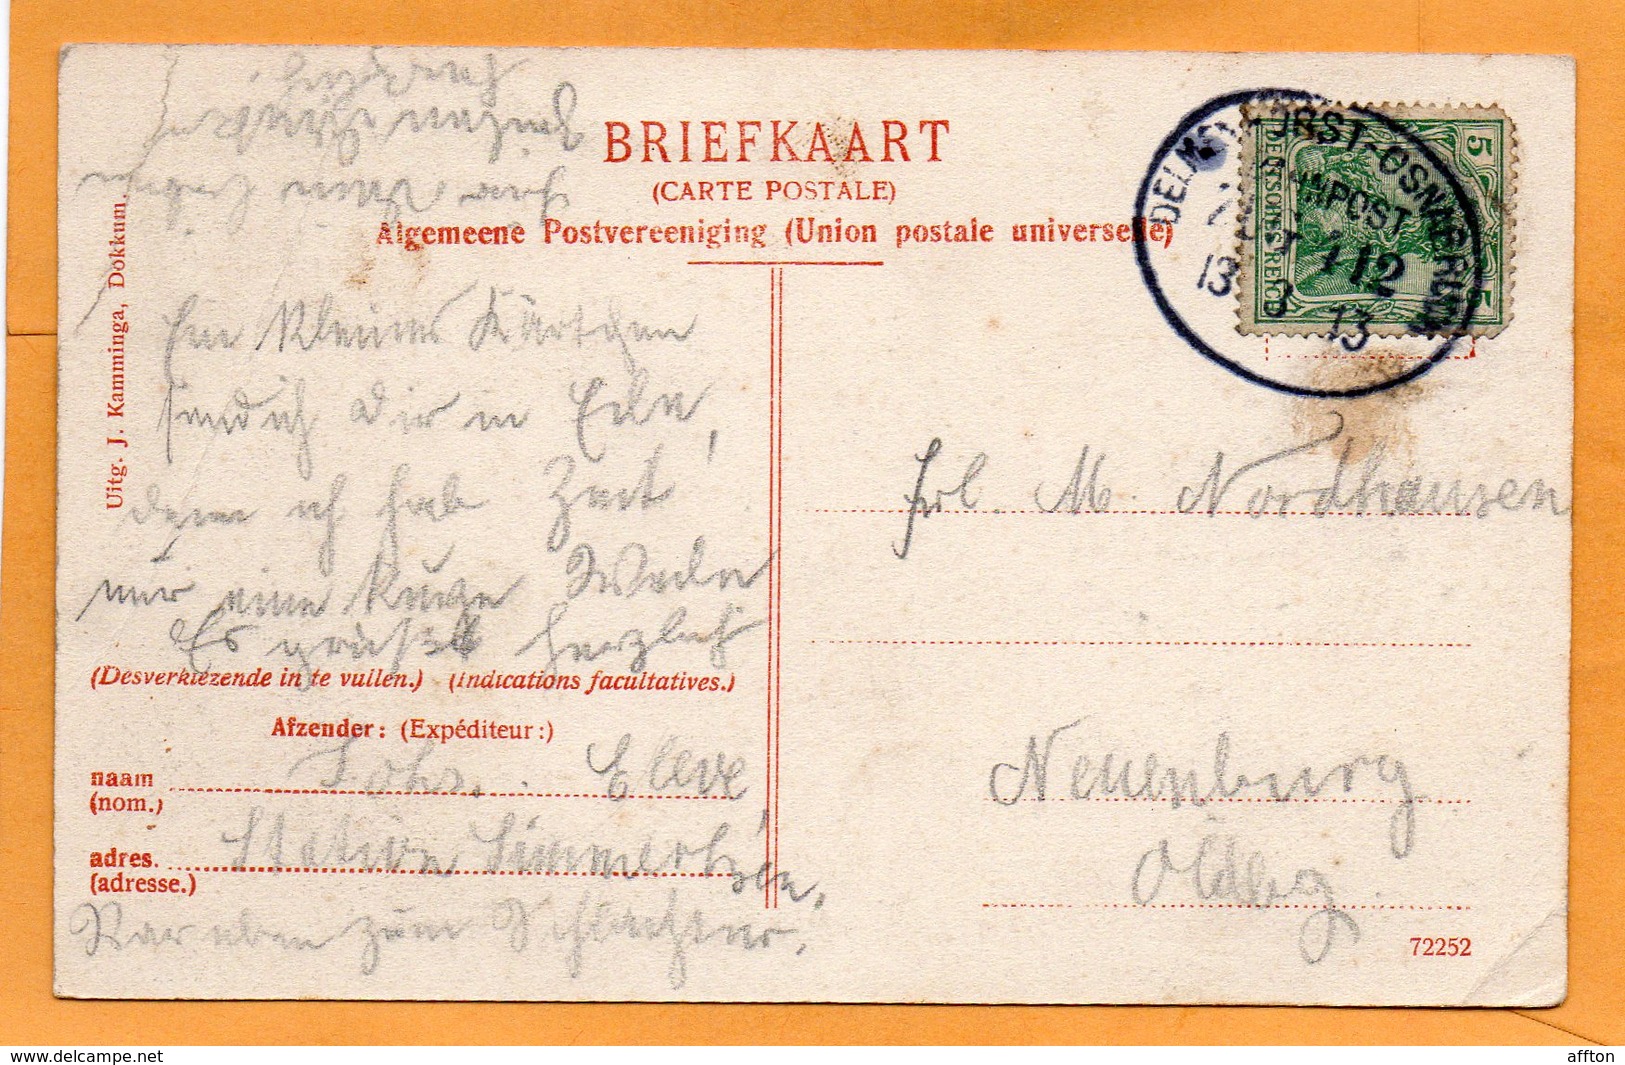 Dokkum Netherlands 1910 Postcard - Dokkum